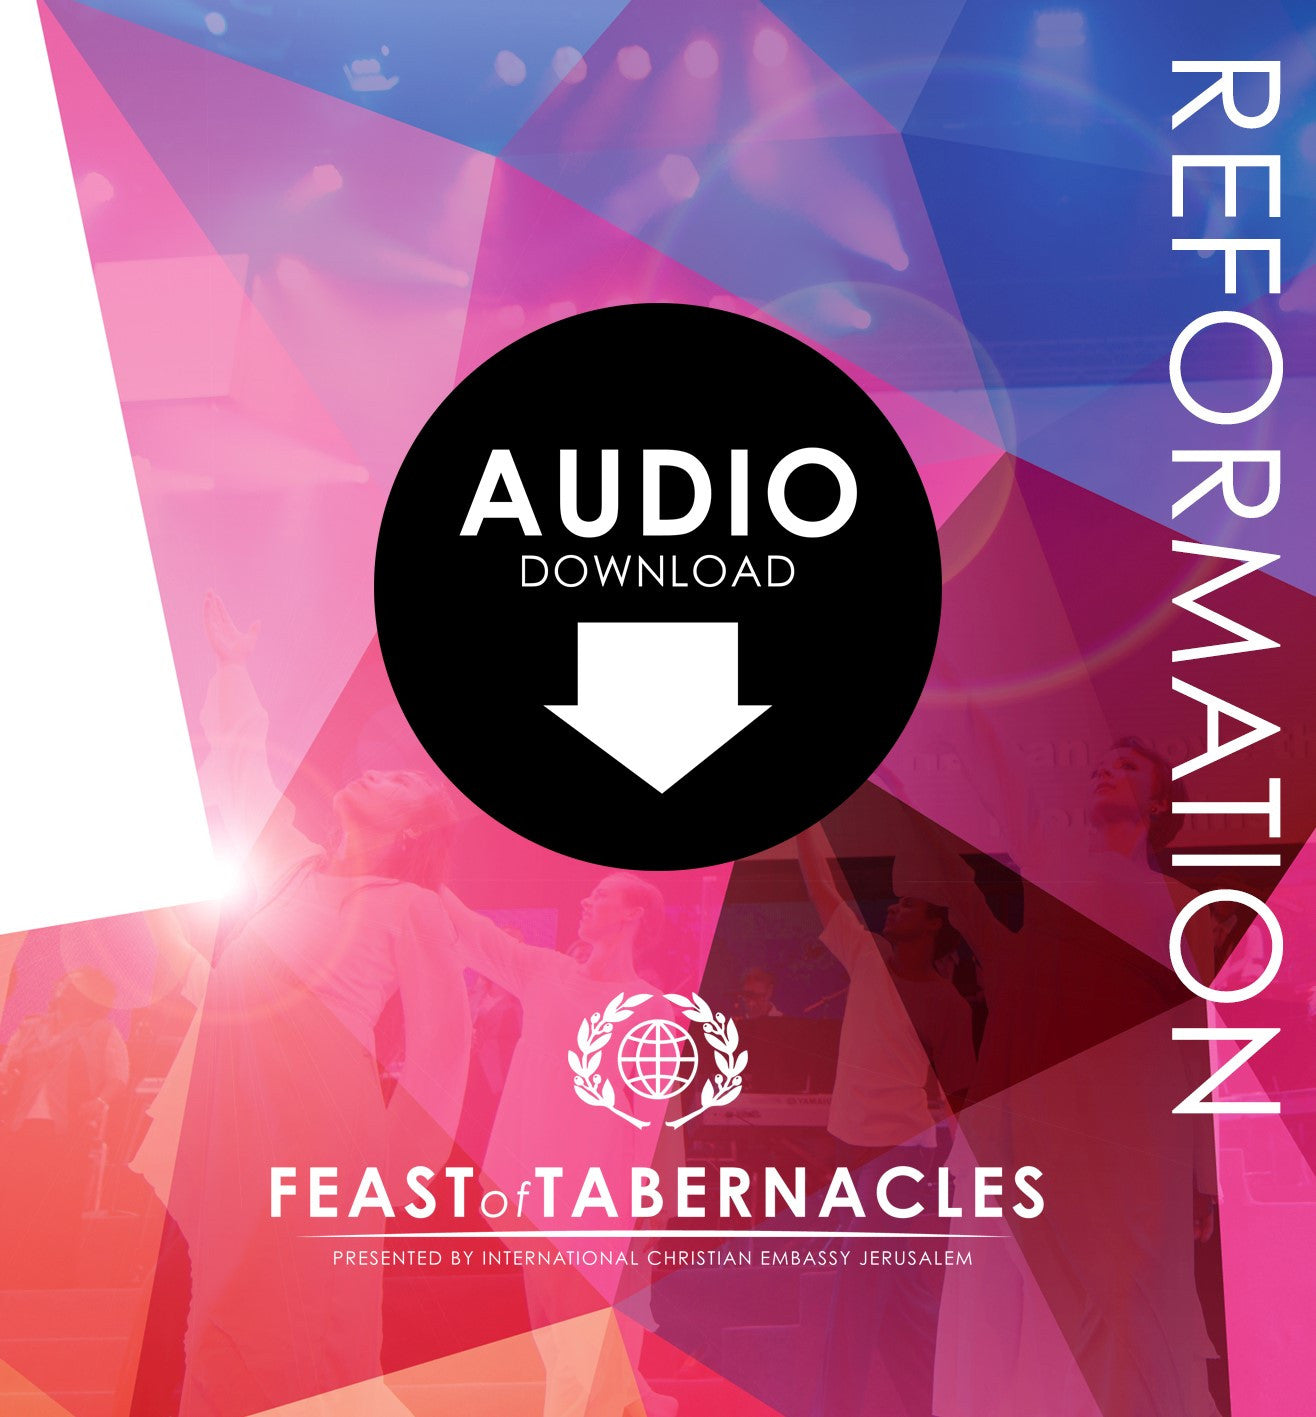 2015 Reformation - Jurgen Buhler - Opening Night seminar Audio Download